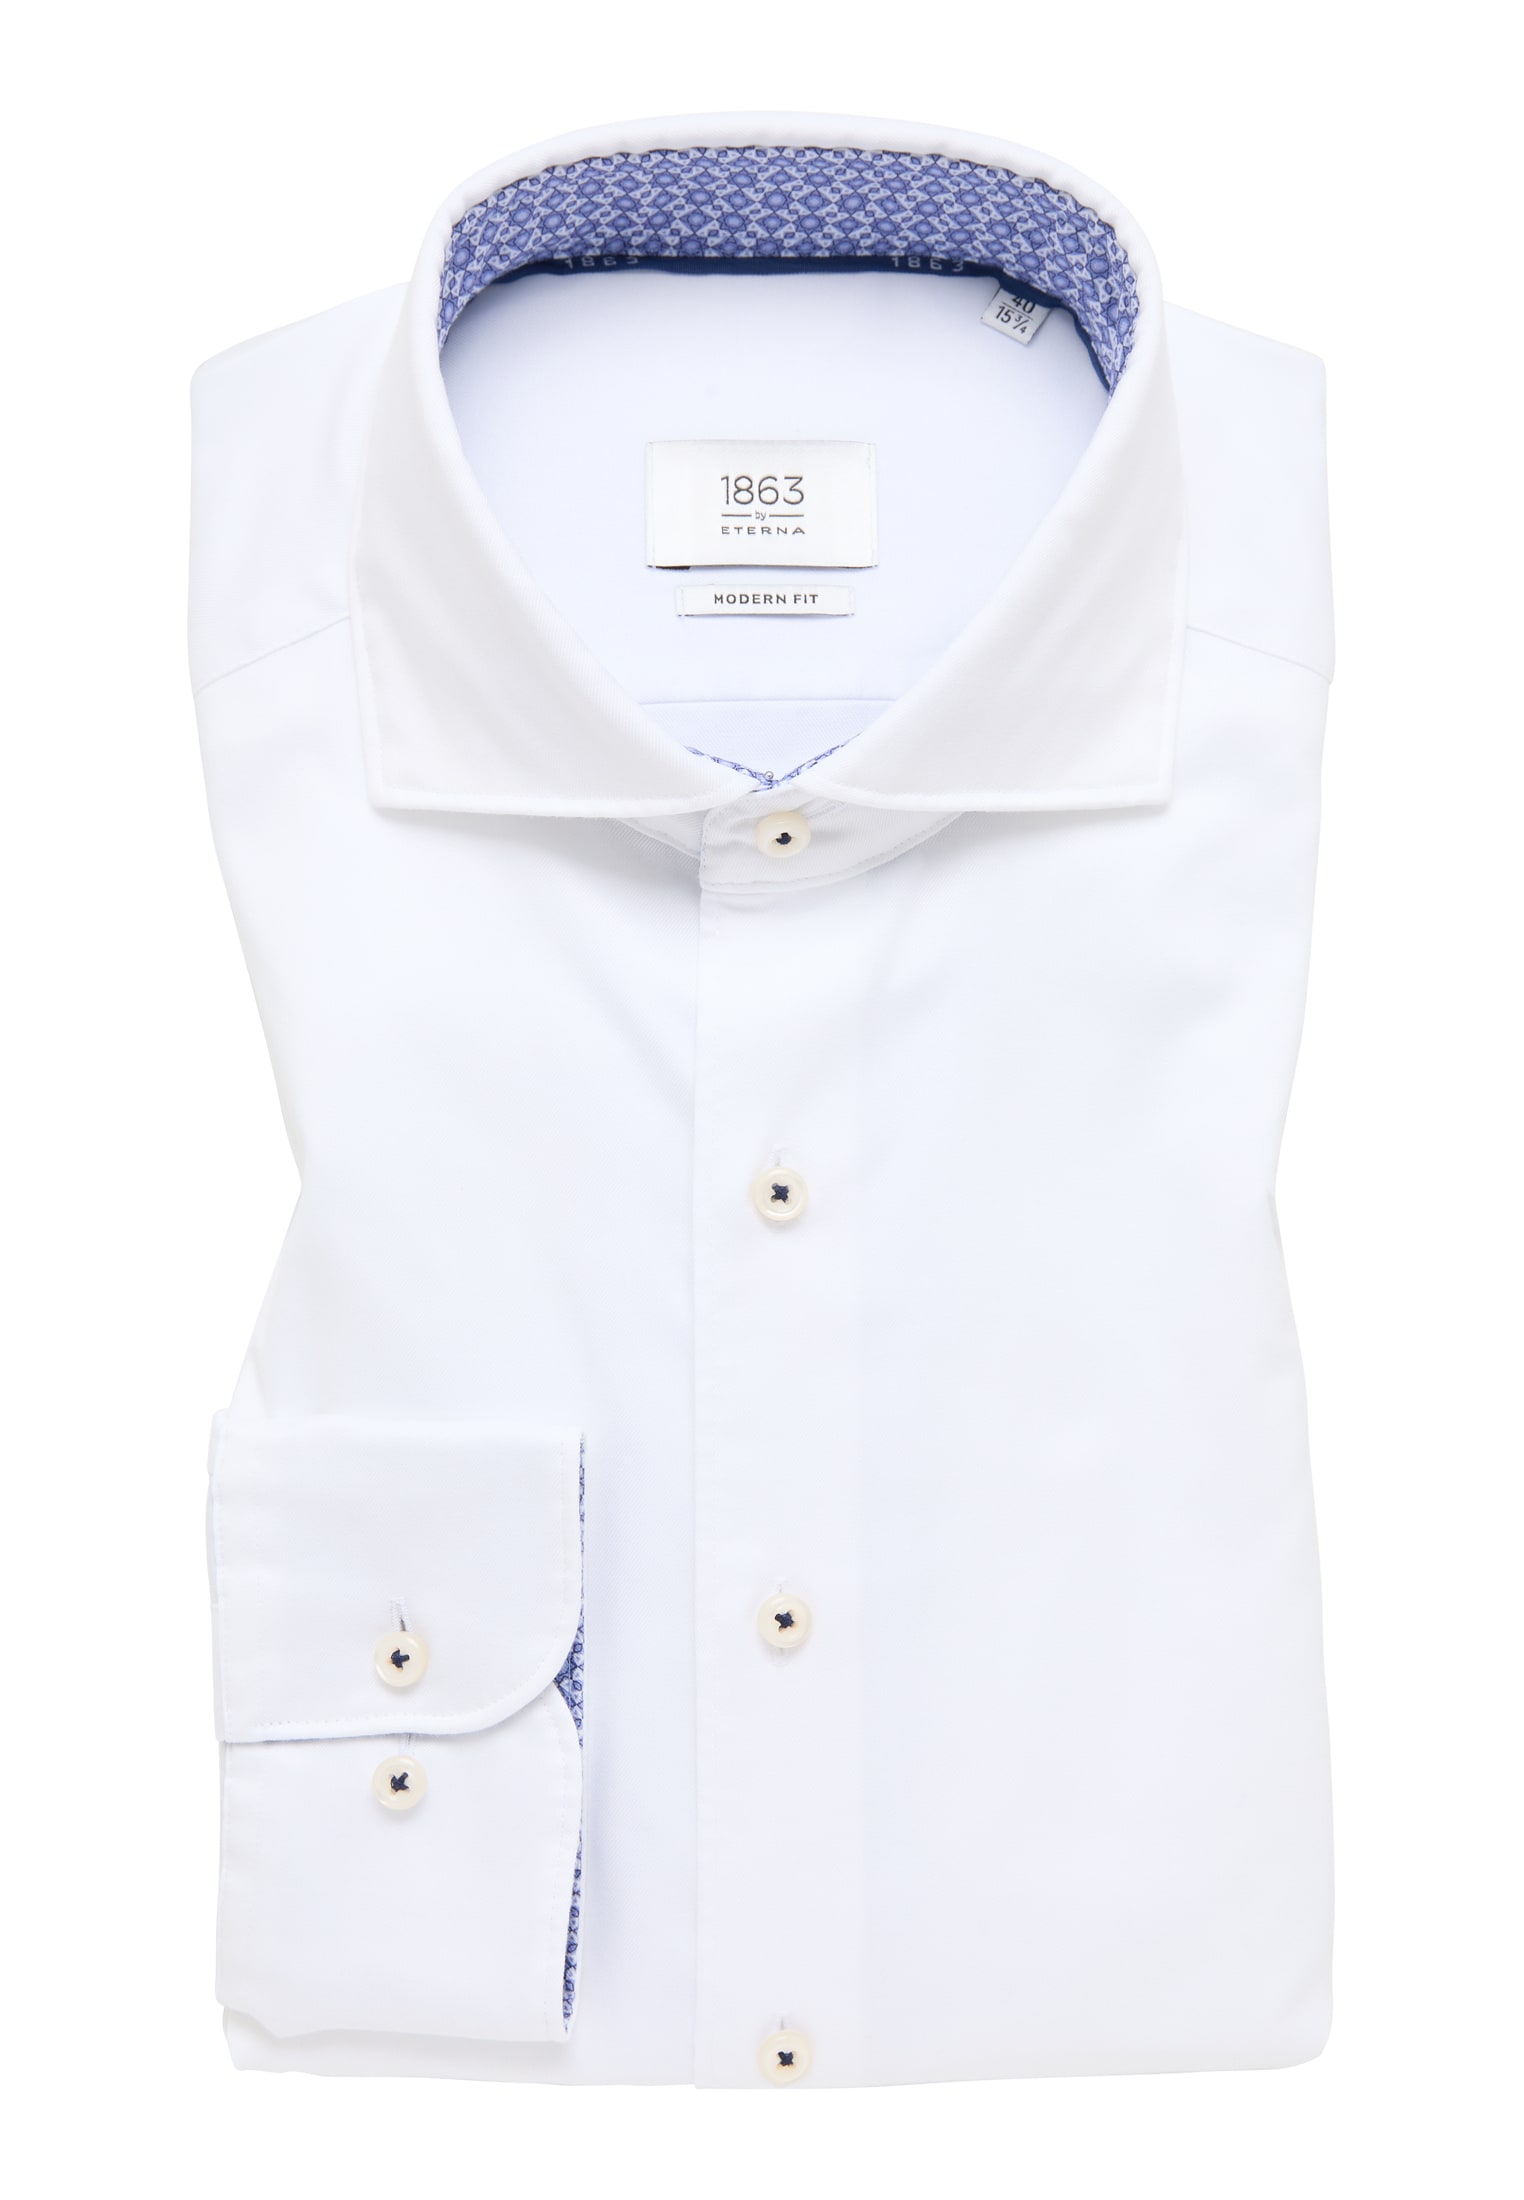 MODERN FIT Soft | Shirt 42 in | Langarm off-white Luxury off-white | | unifarben 1SH11519-00-02-42-1/1